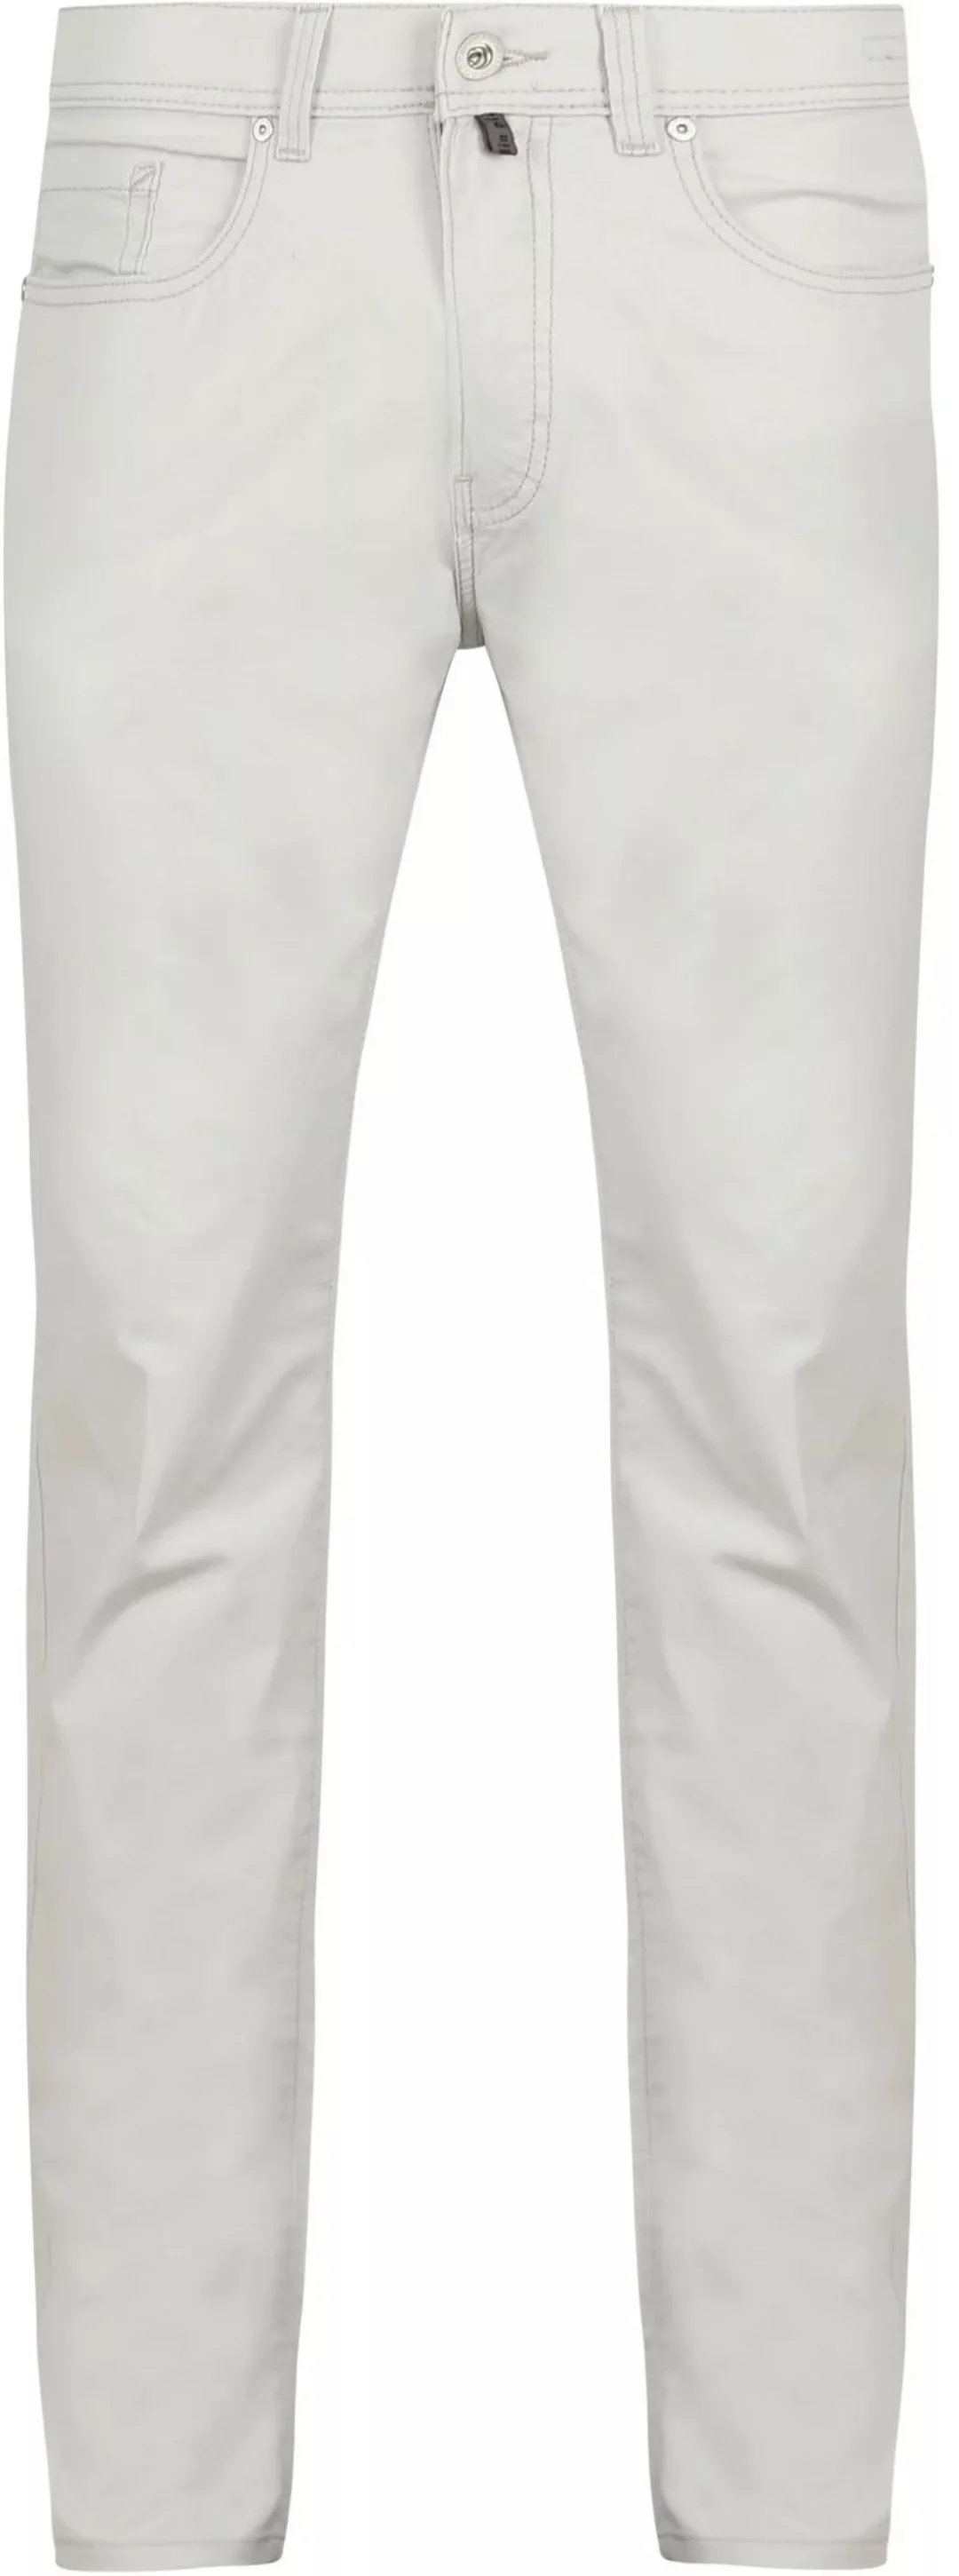 Pierre Cardin Trousers Lyon Tapered Hellgrau - Größe W 31 - L 34 günstig online kaufen